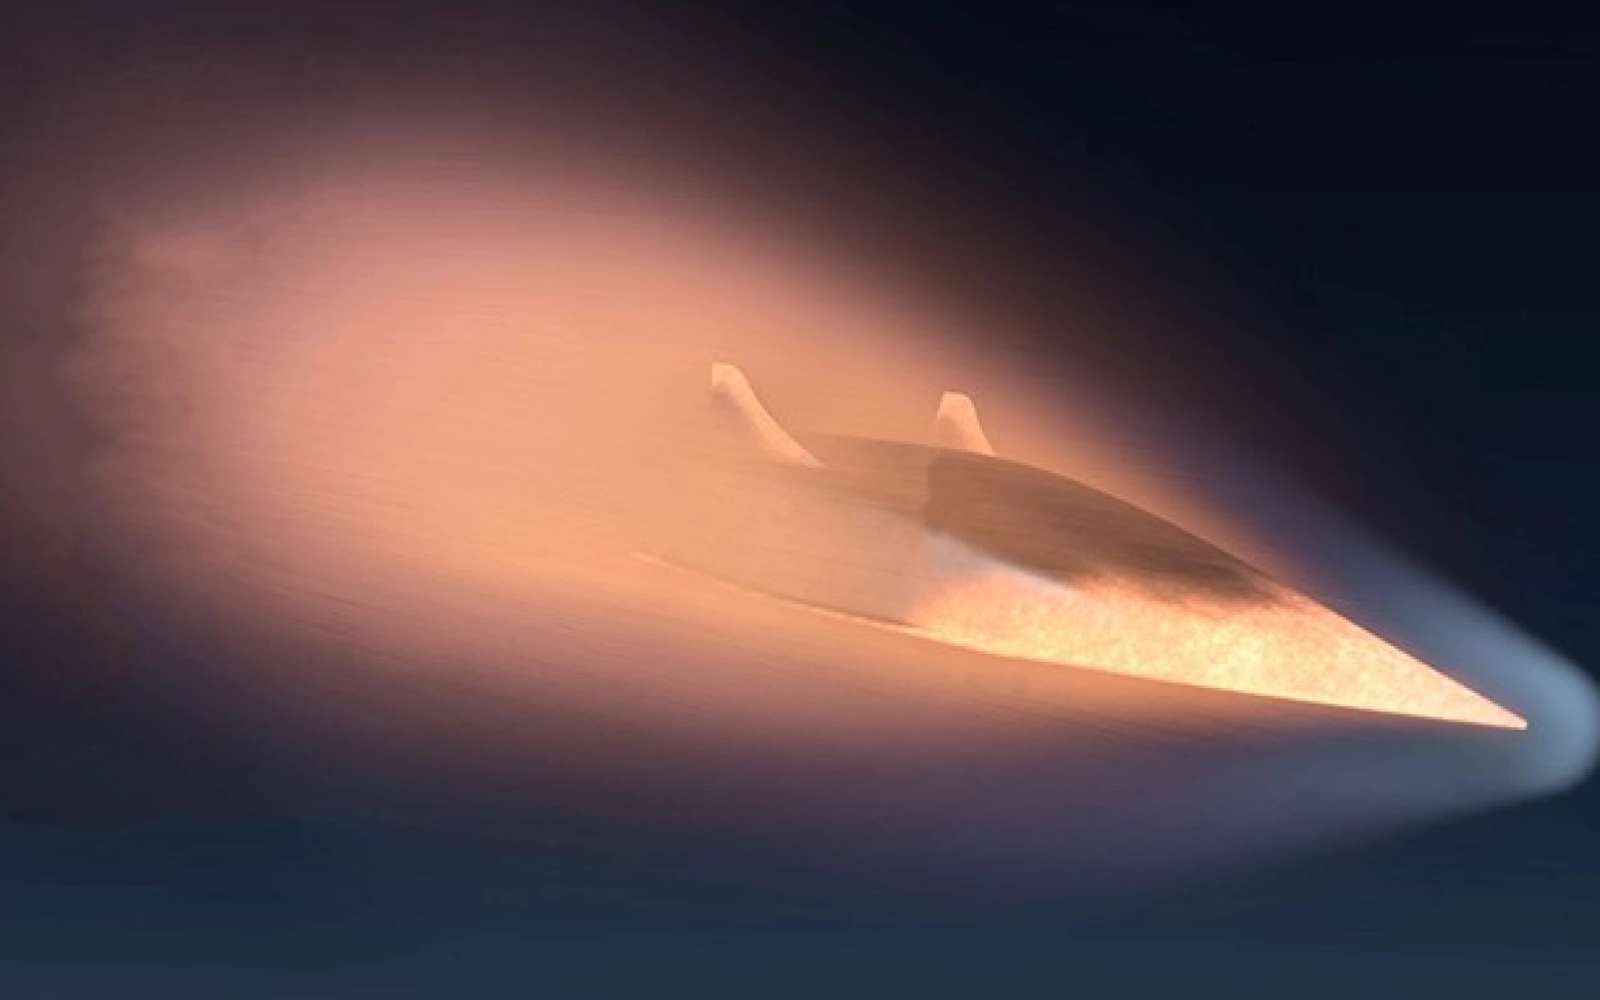 Image virtuelle du planeur hypersonique AGM-183A de Lockheed Martin. © Lockheed Martin